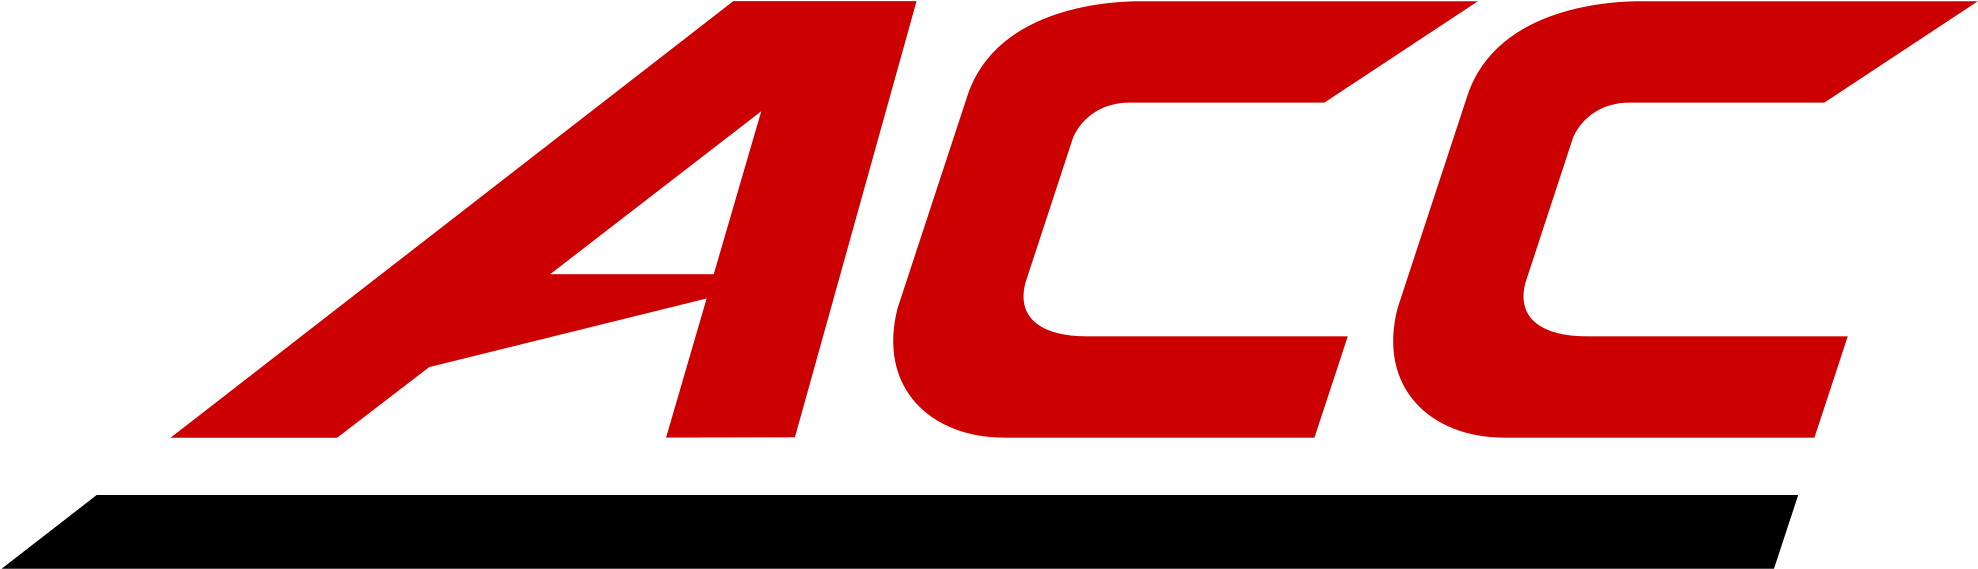 Open - Nc State Acc Logo (2000x590)